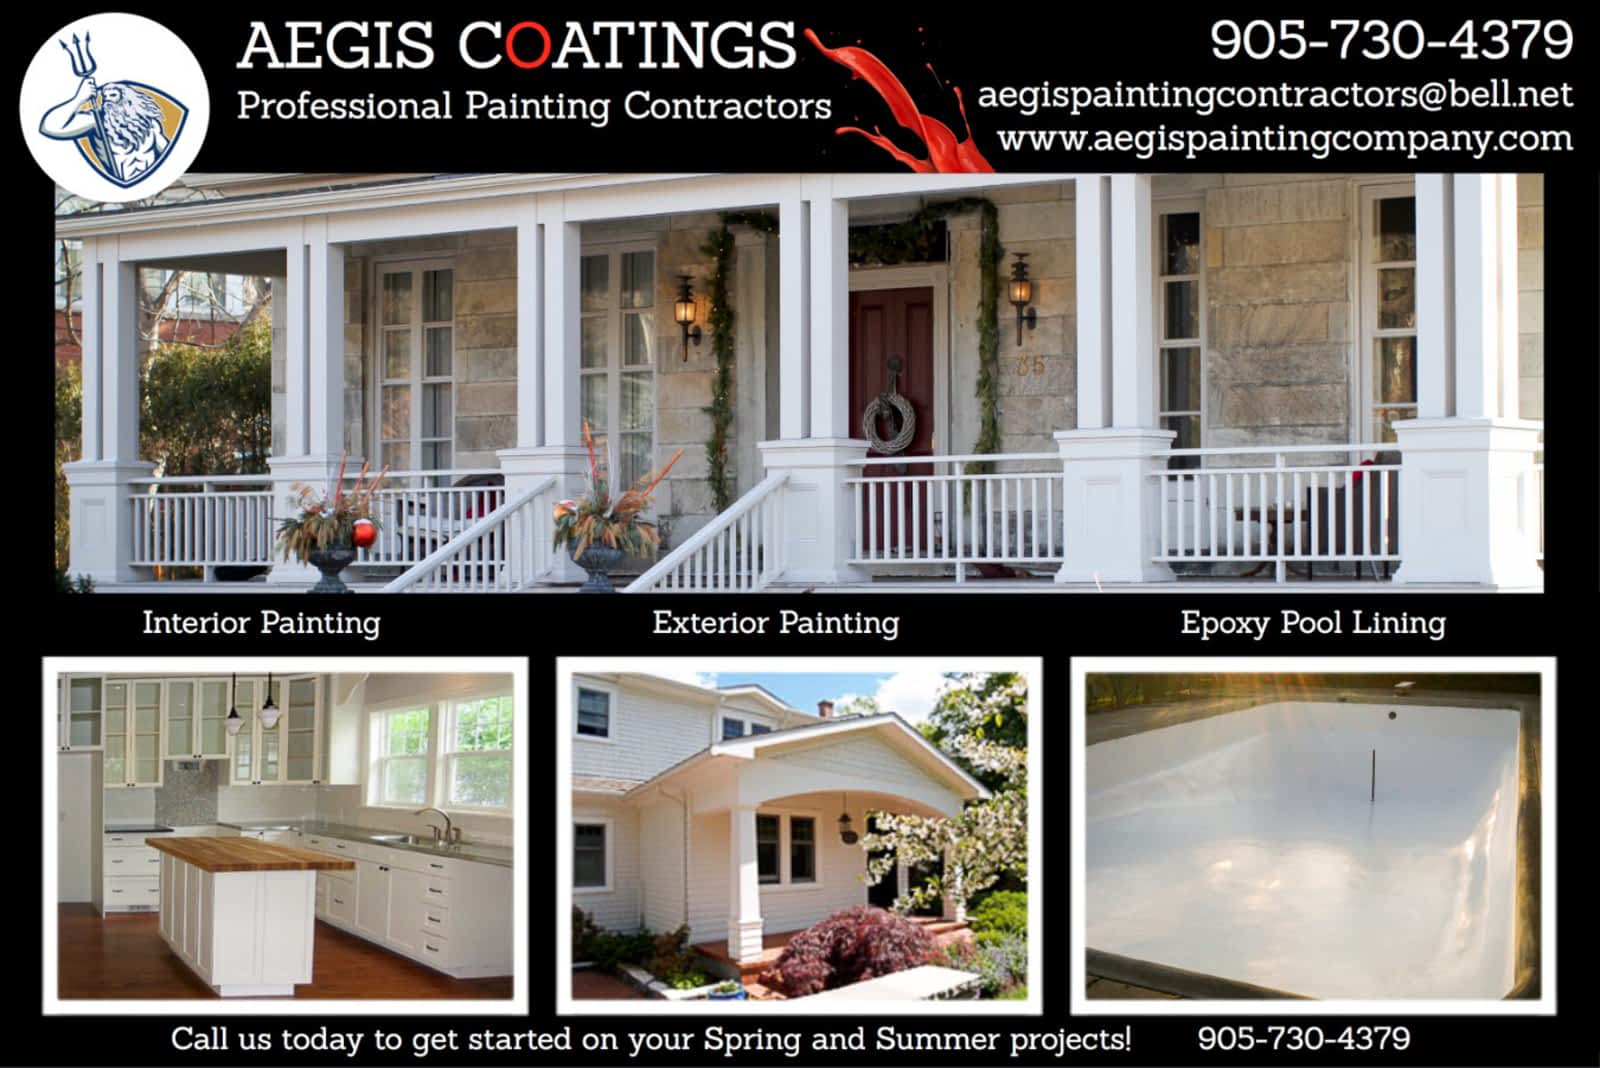 aegis-coatings-professional-painting-contractors-1.jpg